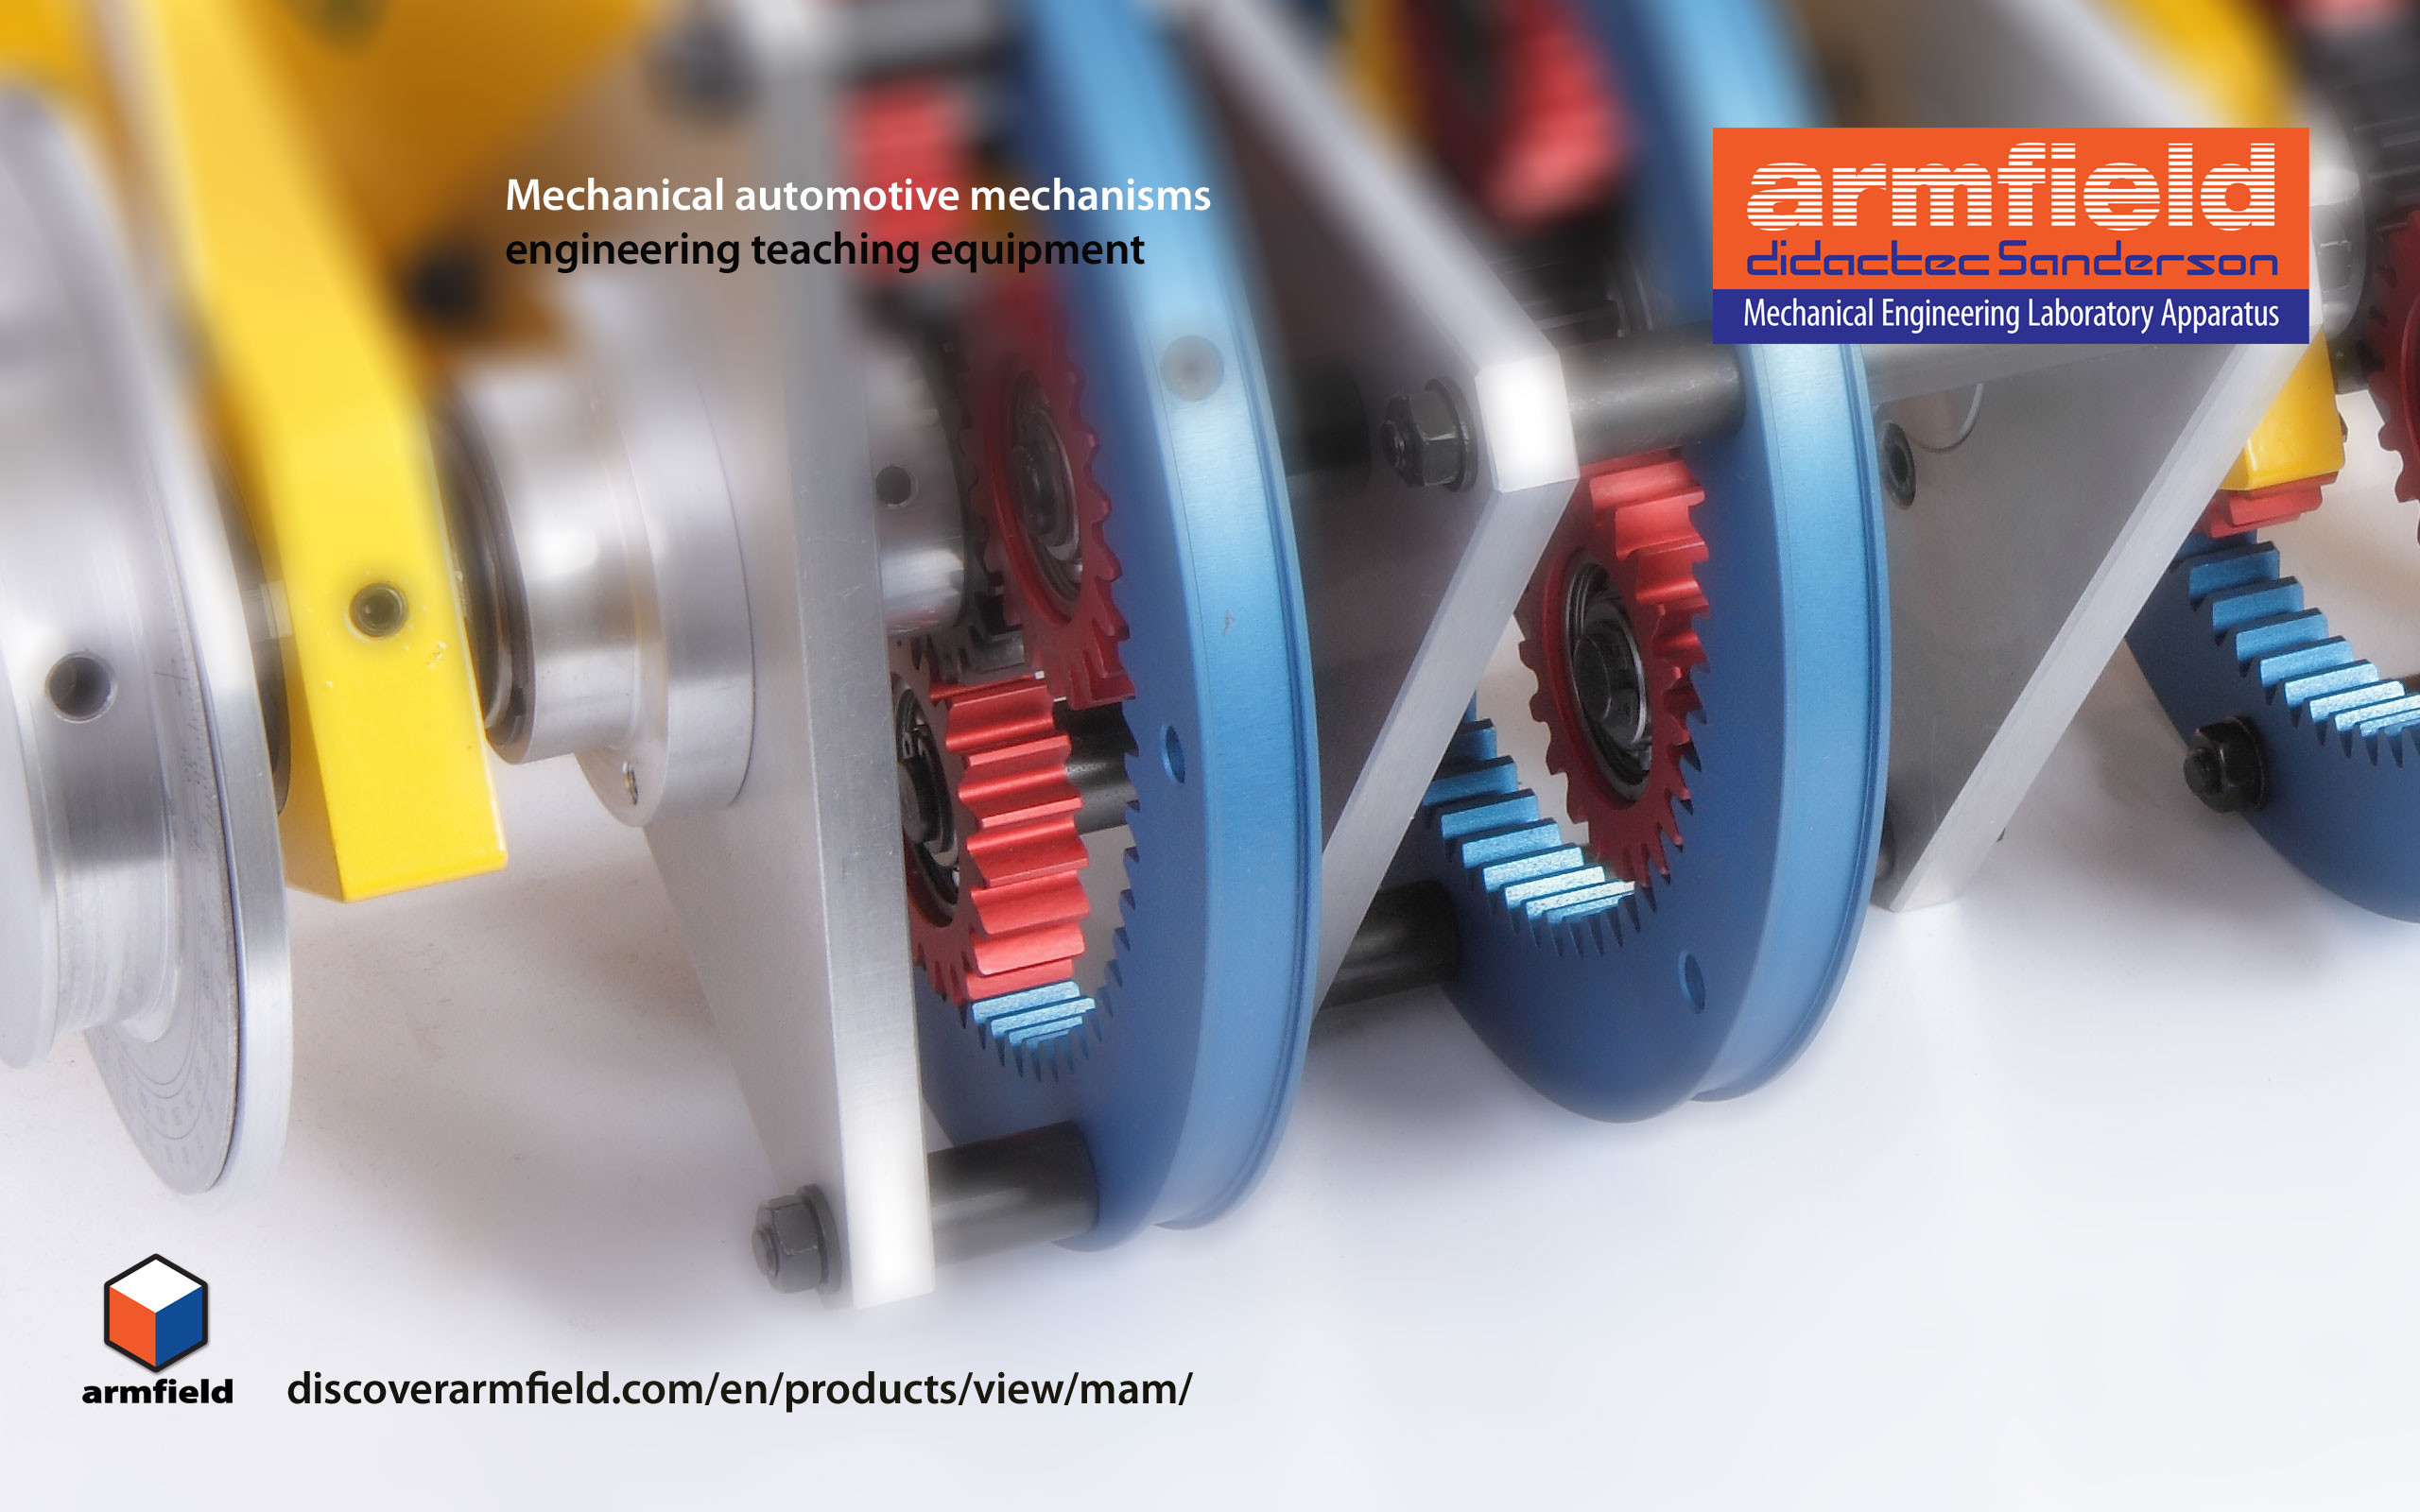 2560x1600 Armfield - Mechanical engineering equipment (mechanical and automotive  mechanisms - MAM)